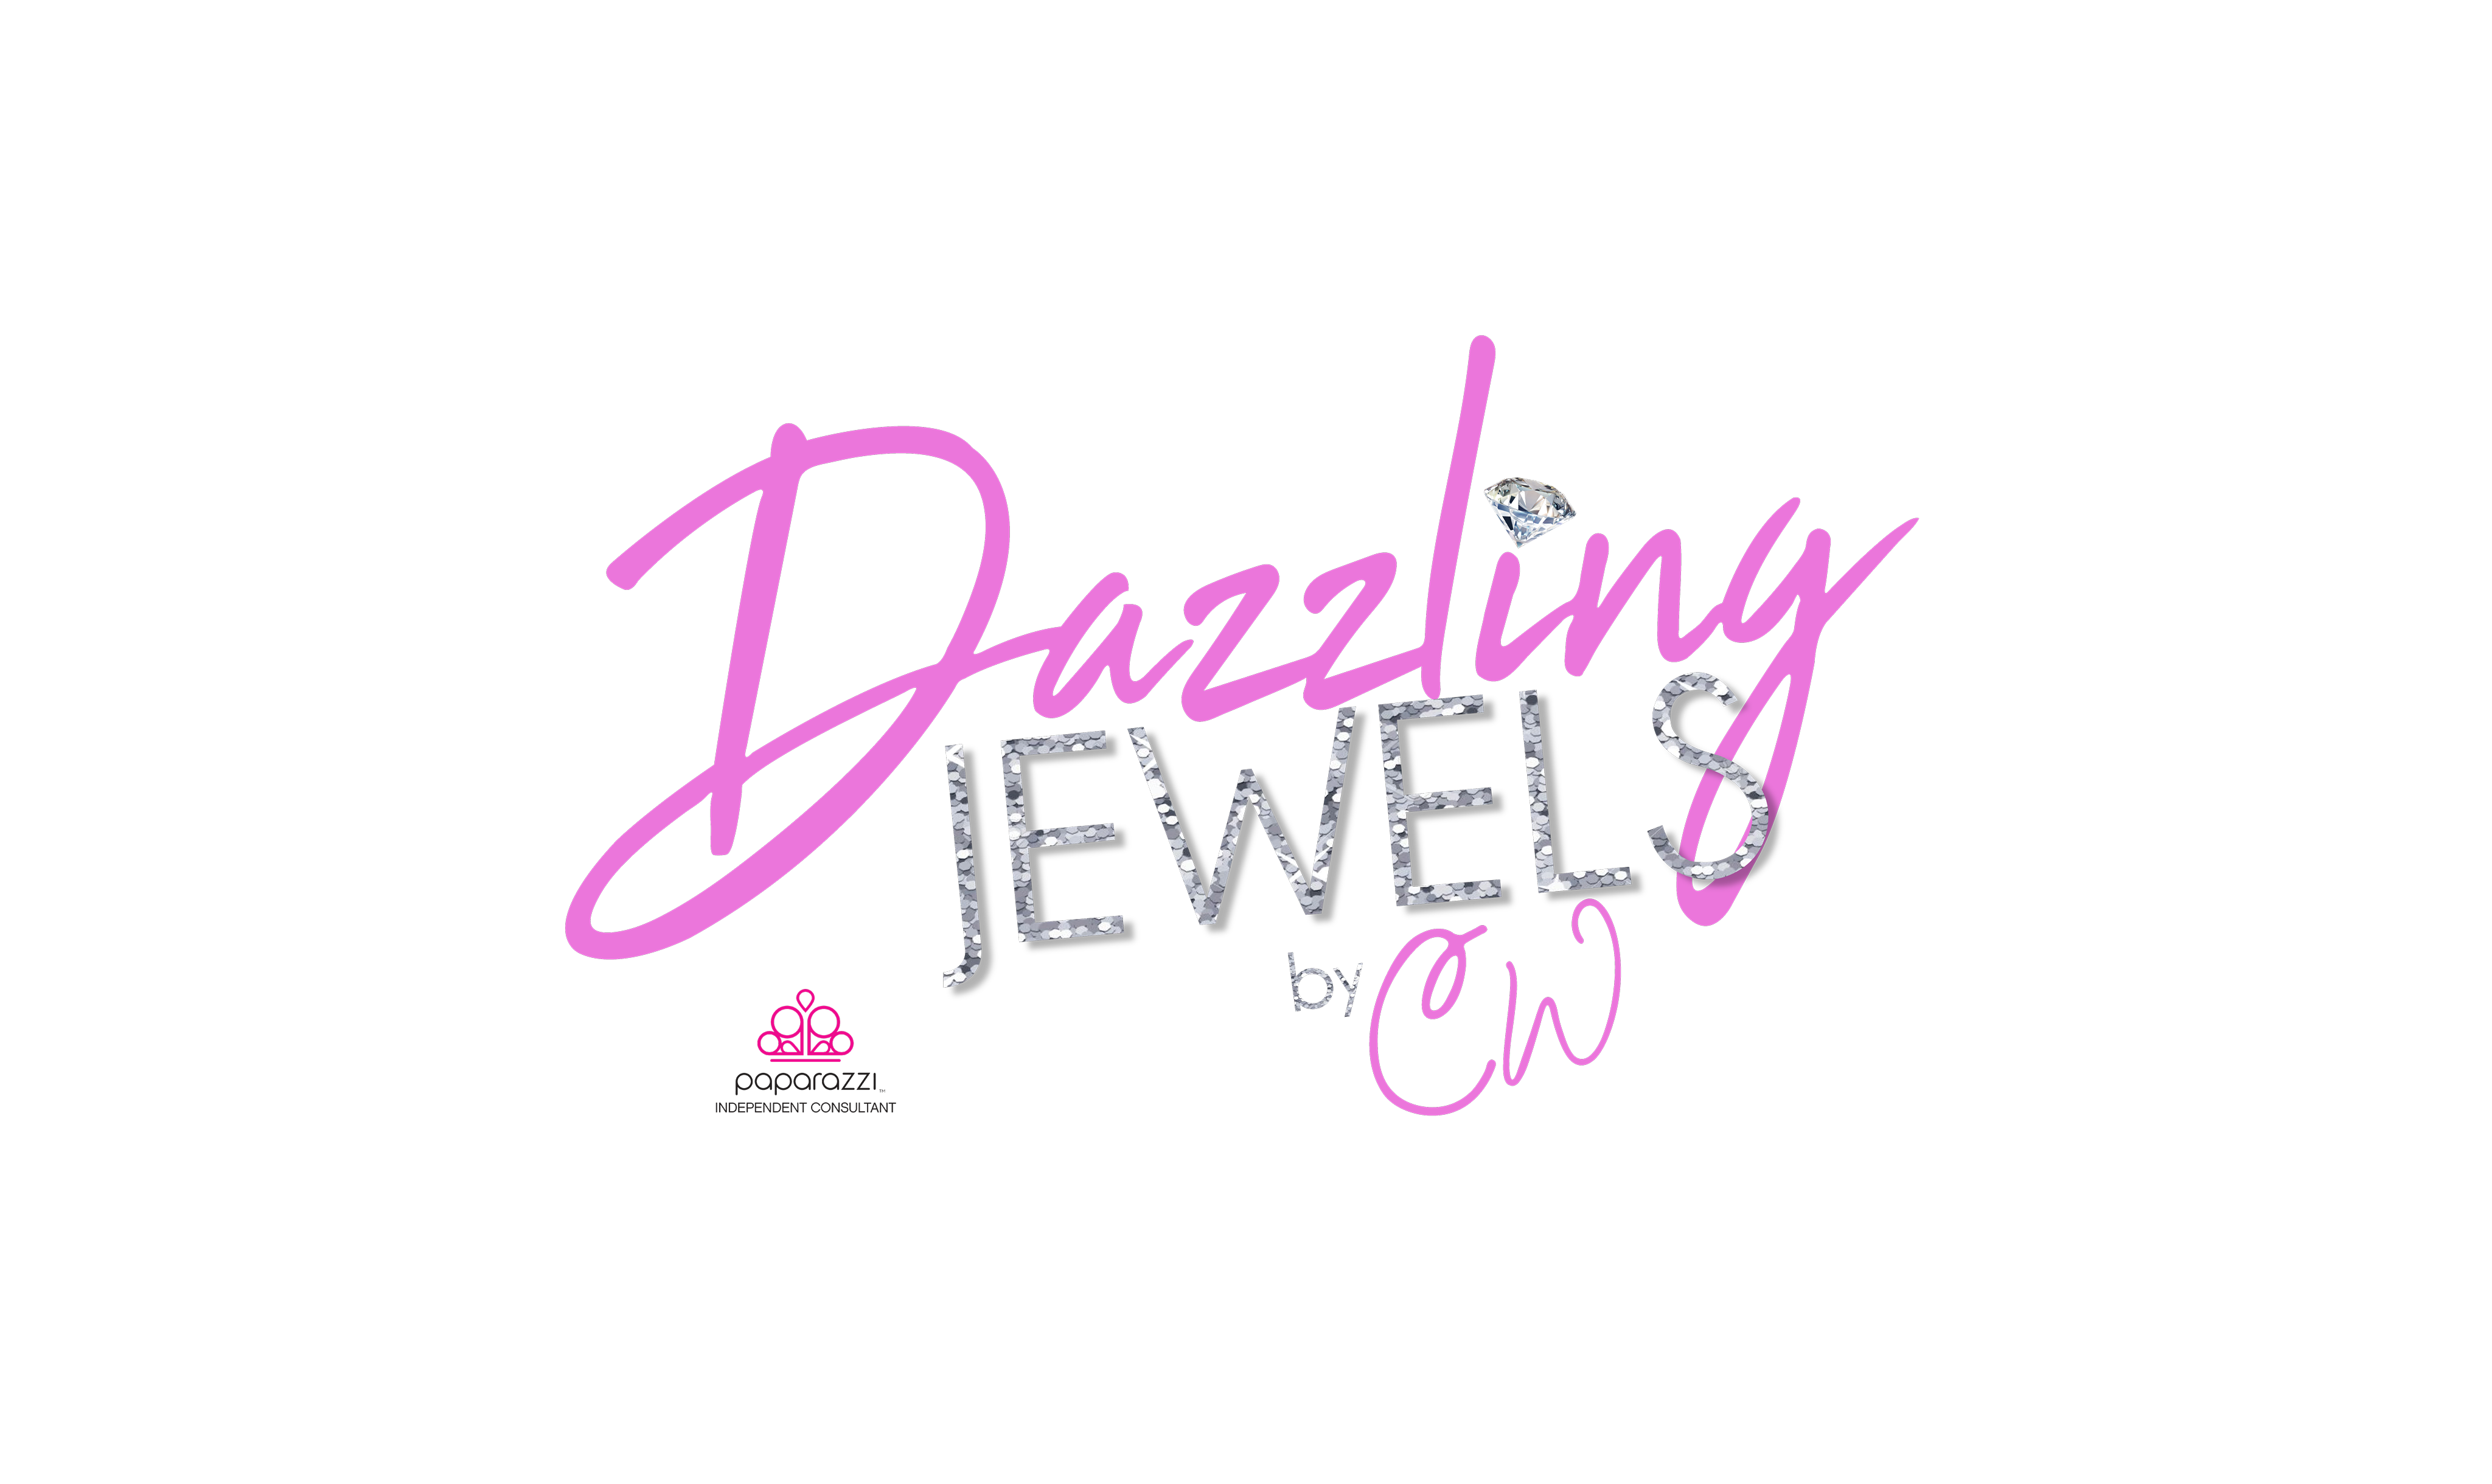 Dazzling Jewels by CW